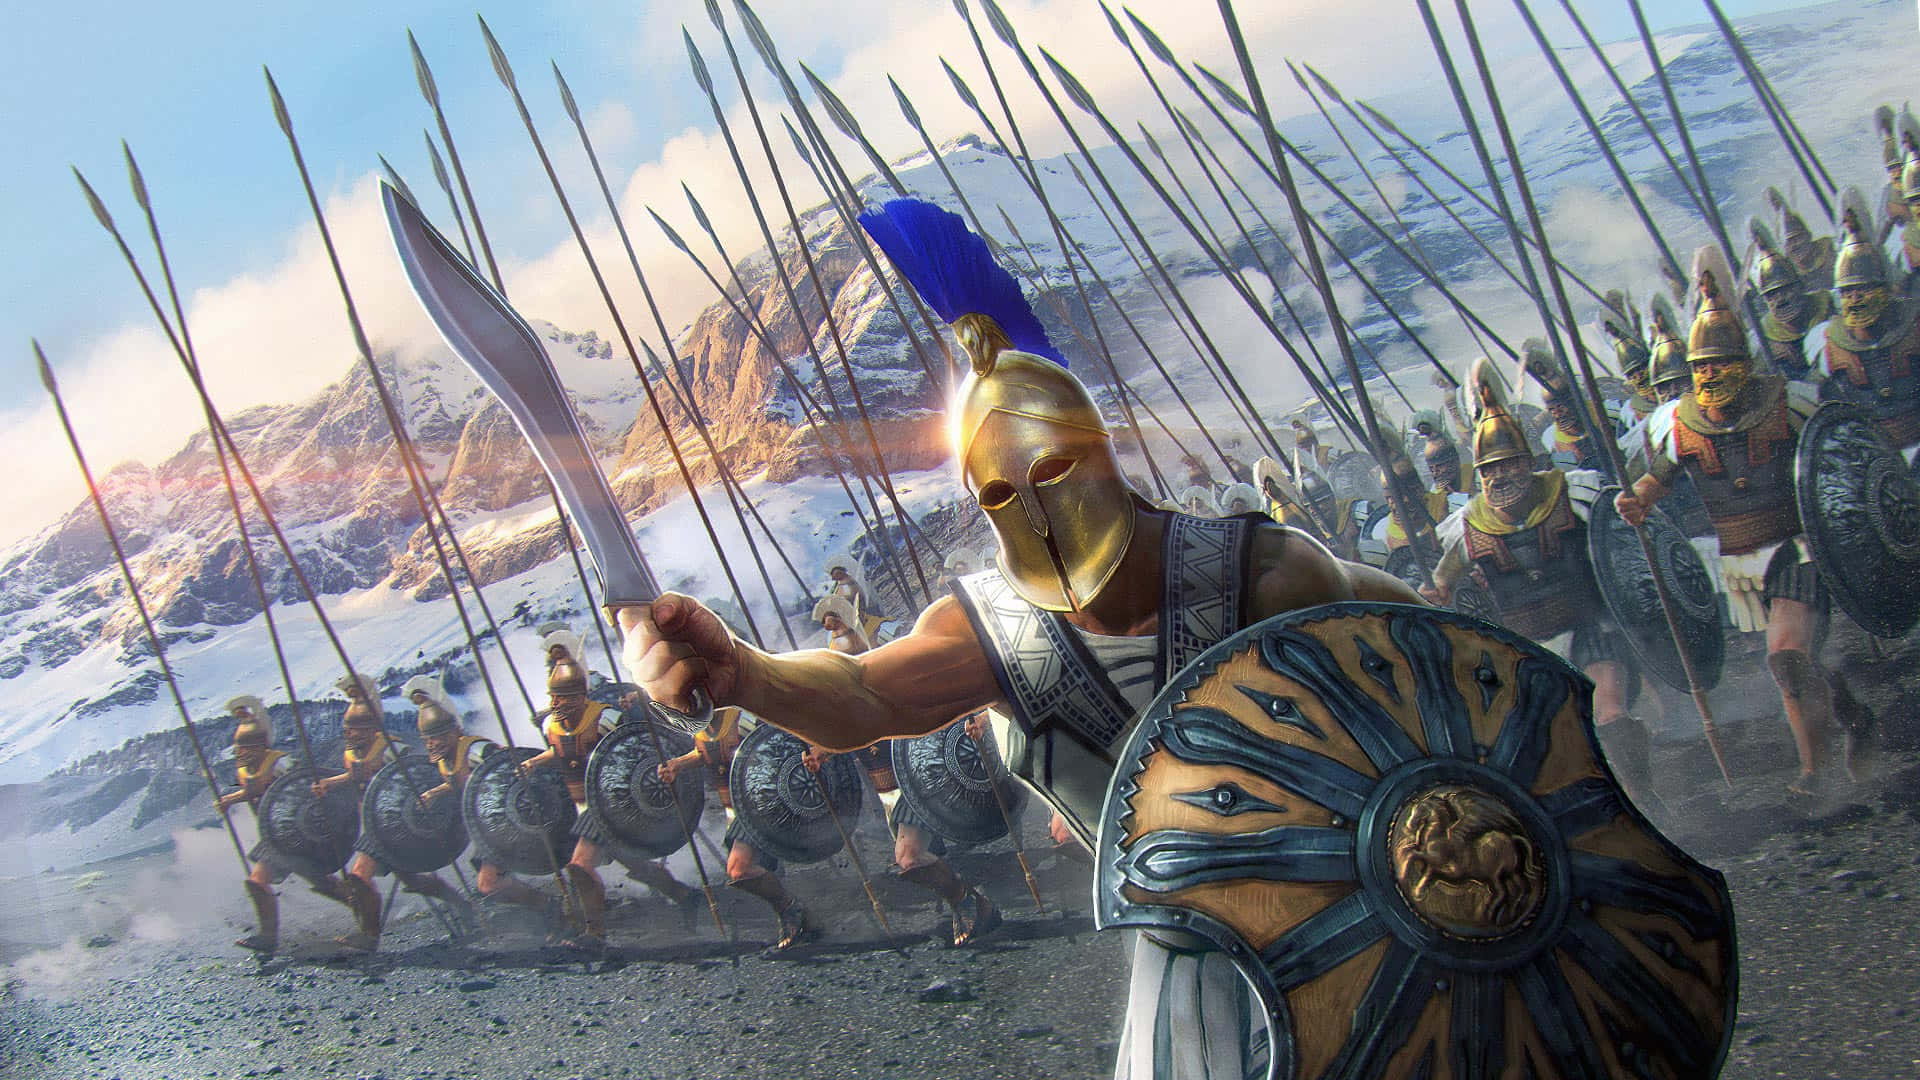 Dynamic Battle Display - Total War Rome 2